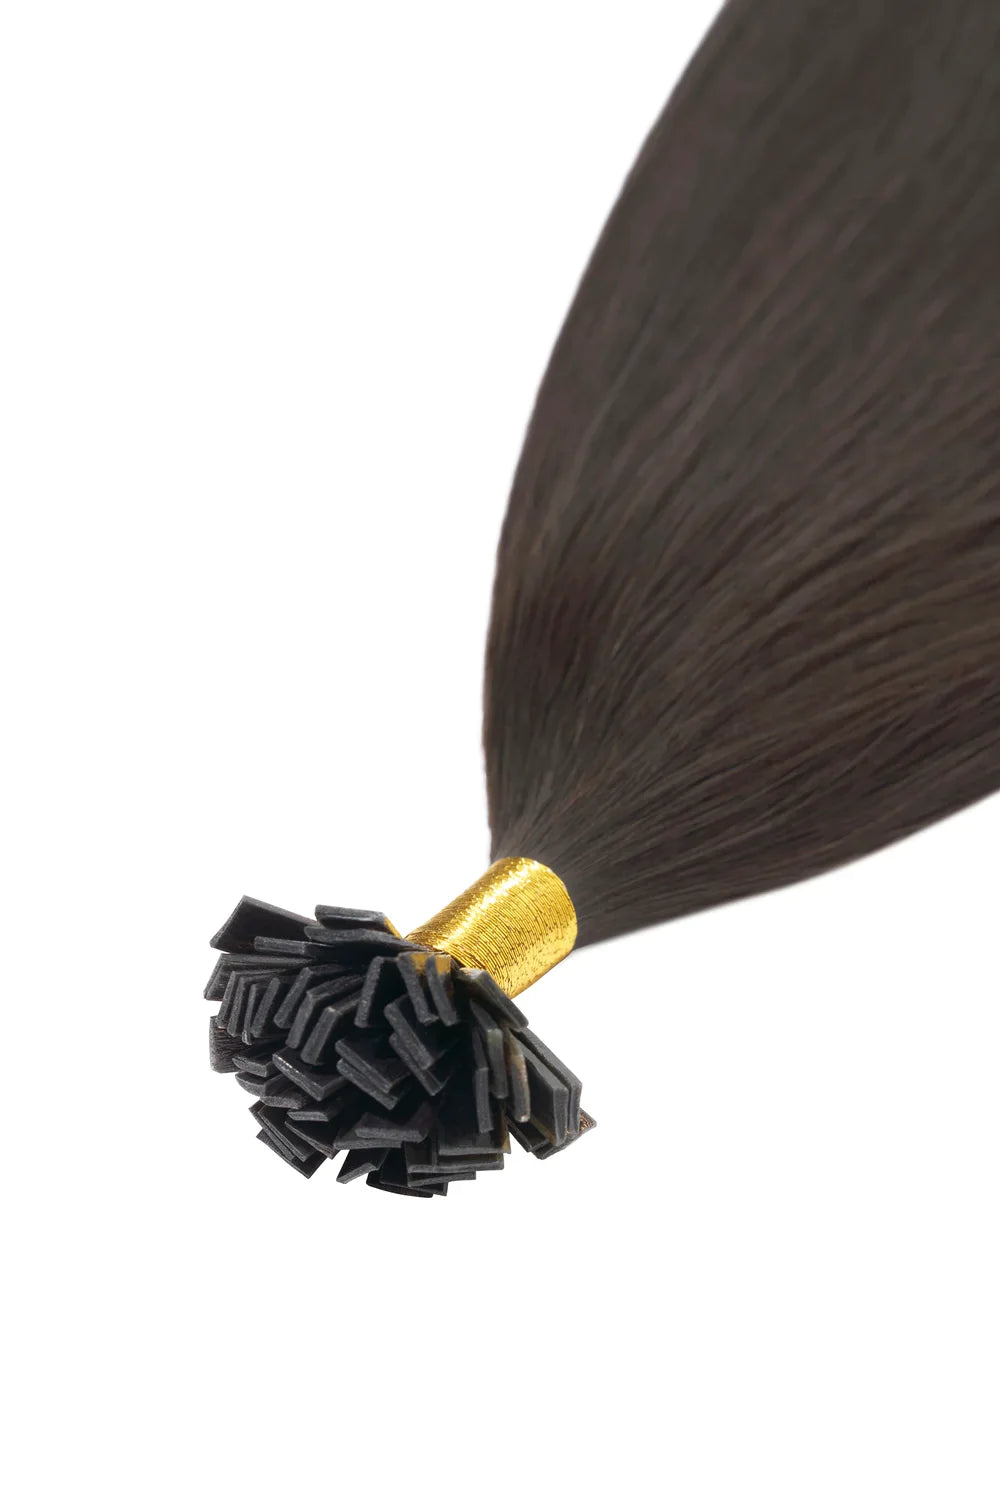 Darkest Brown (#2) Remy Royale Flat Tip Hair Extensions